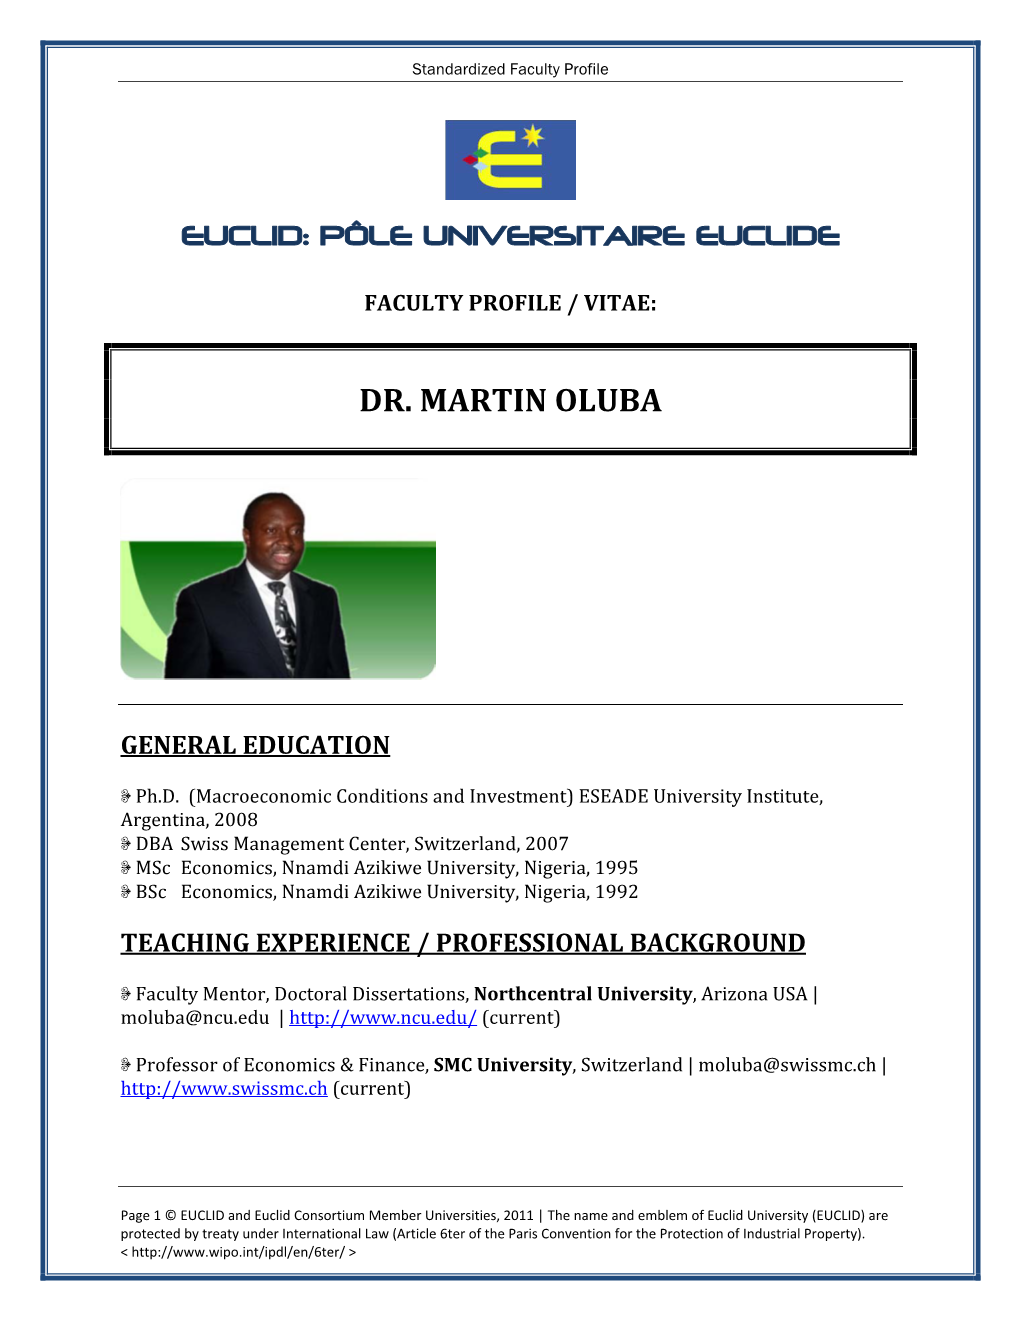 Dr. Martin Oluba